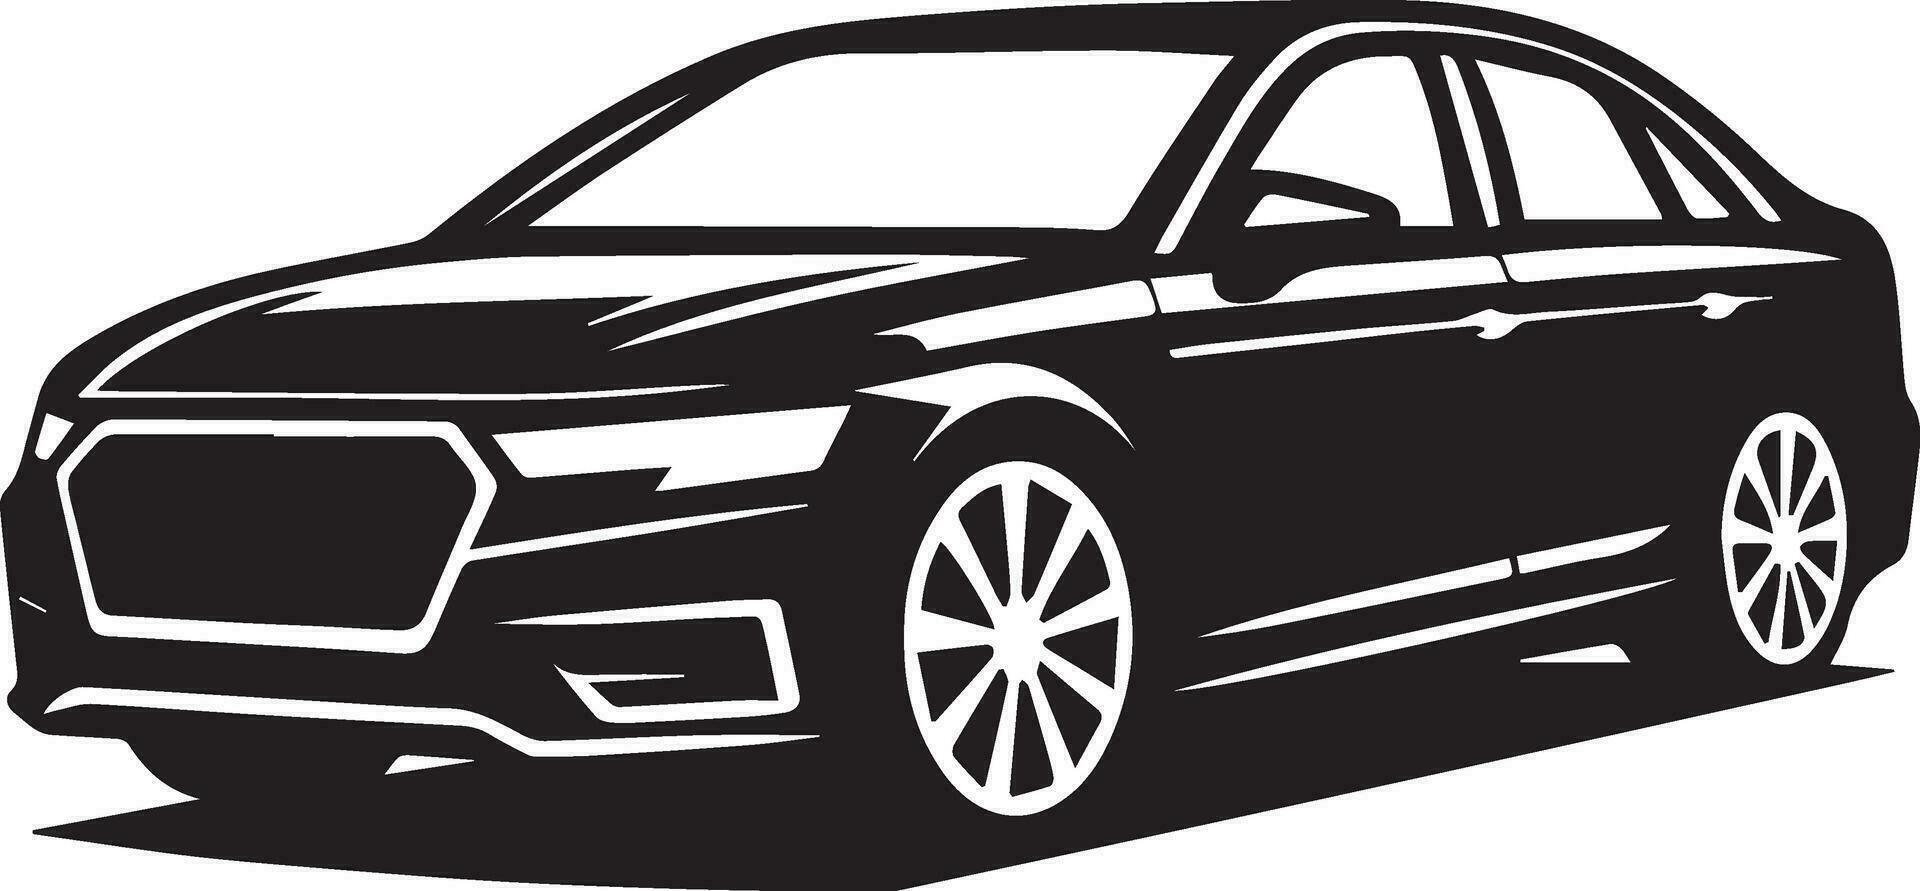 Car vector silhouette illustration black color 13